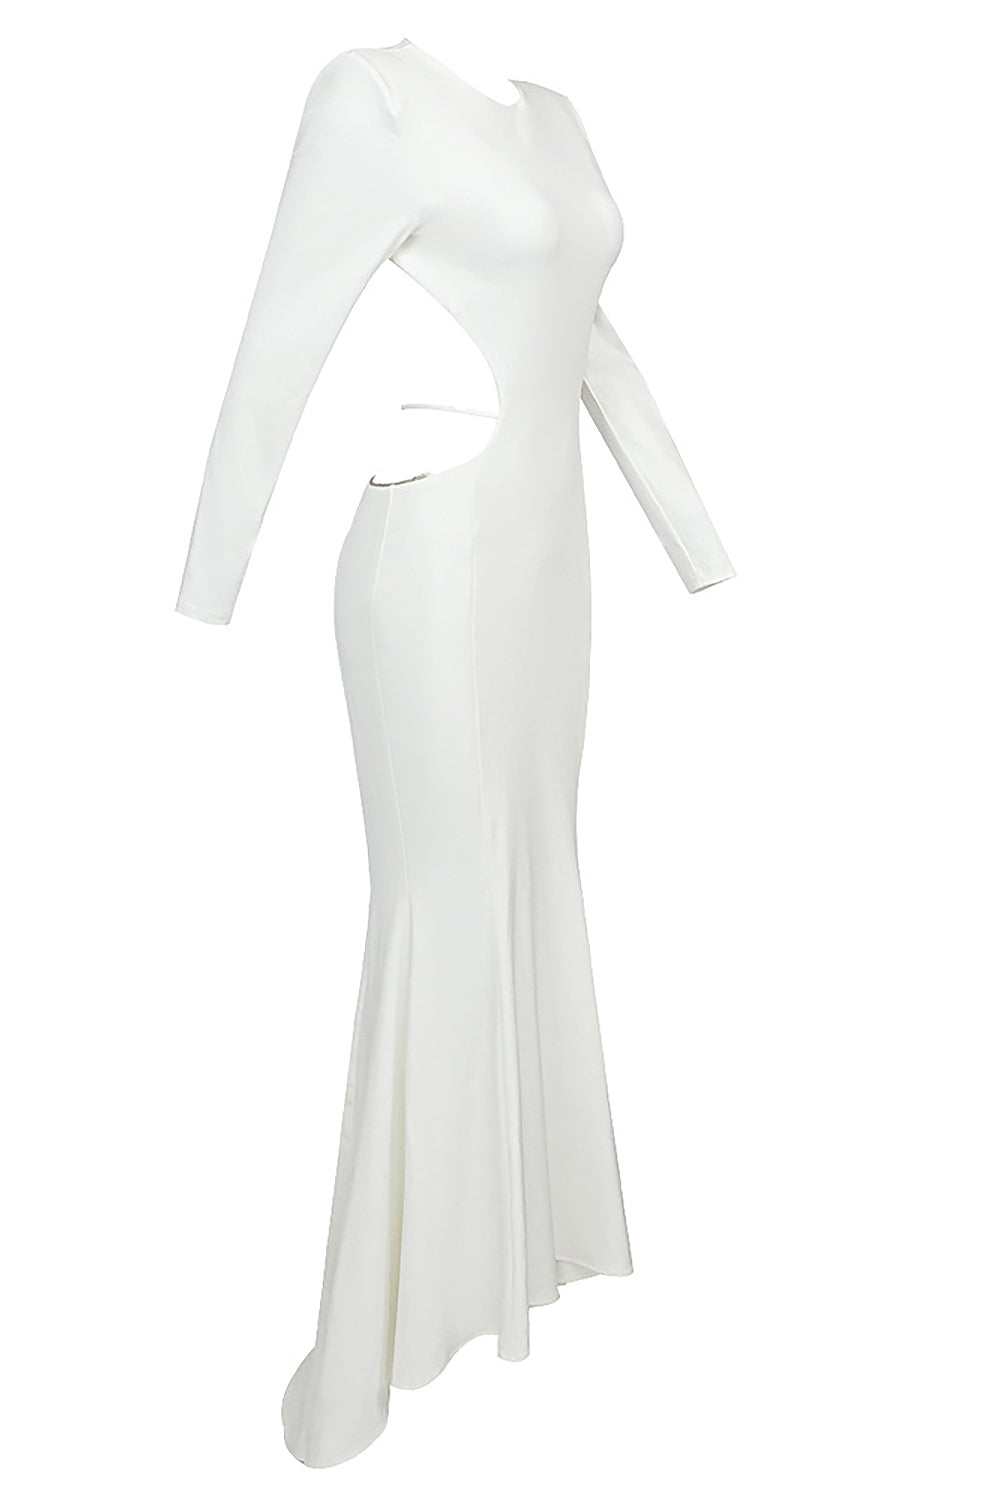 Long Sleeve Backless Mermaid Maxi Dress In White